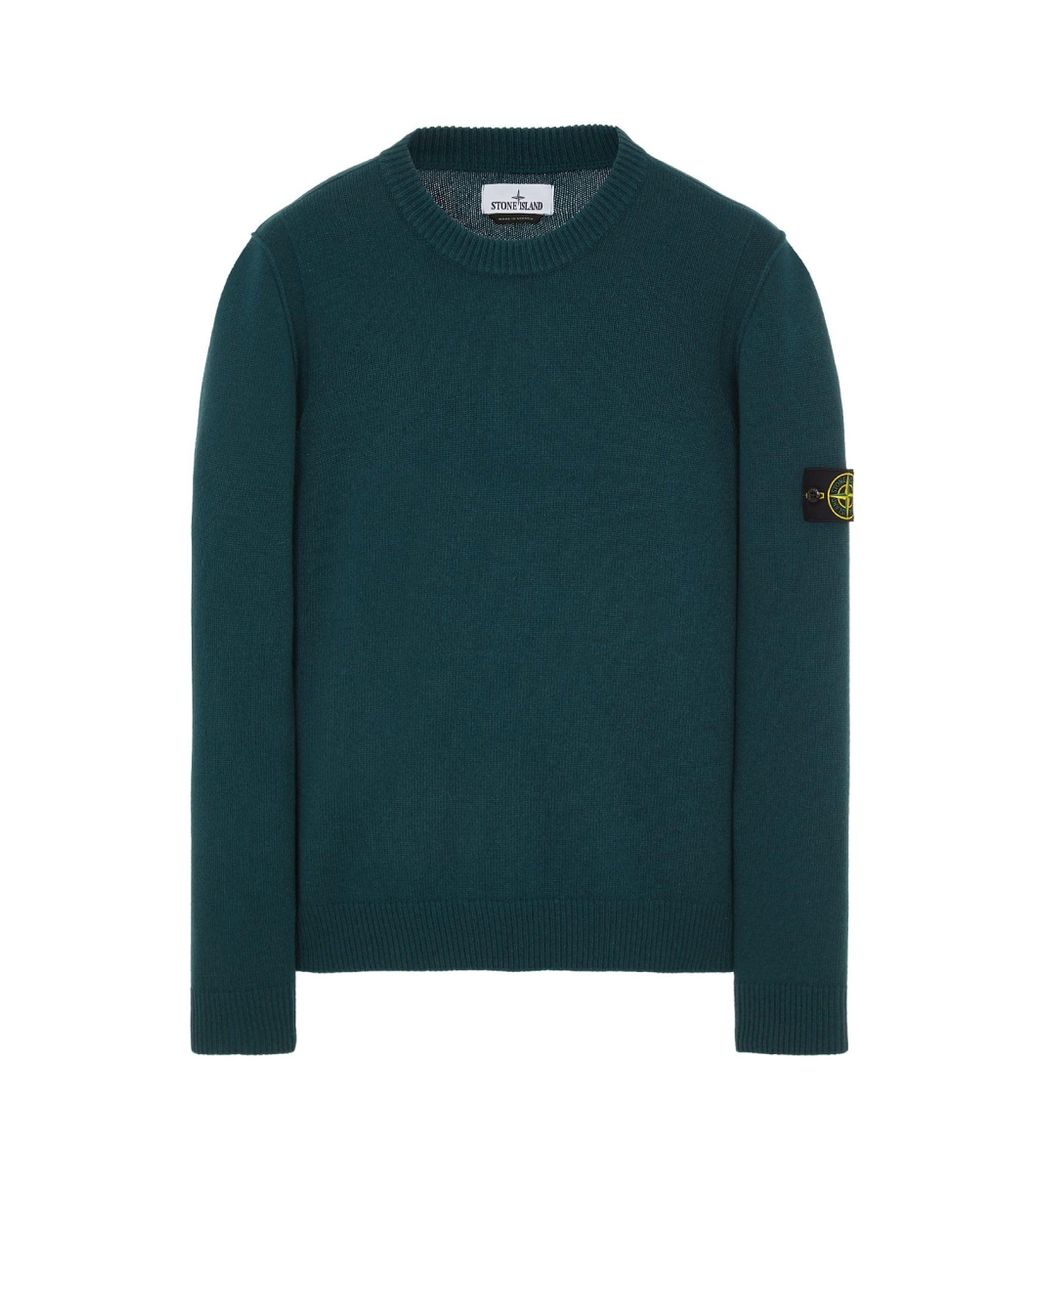 Stone Island Petrol Stretch Wool Sweater in Green for Men | Lyst